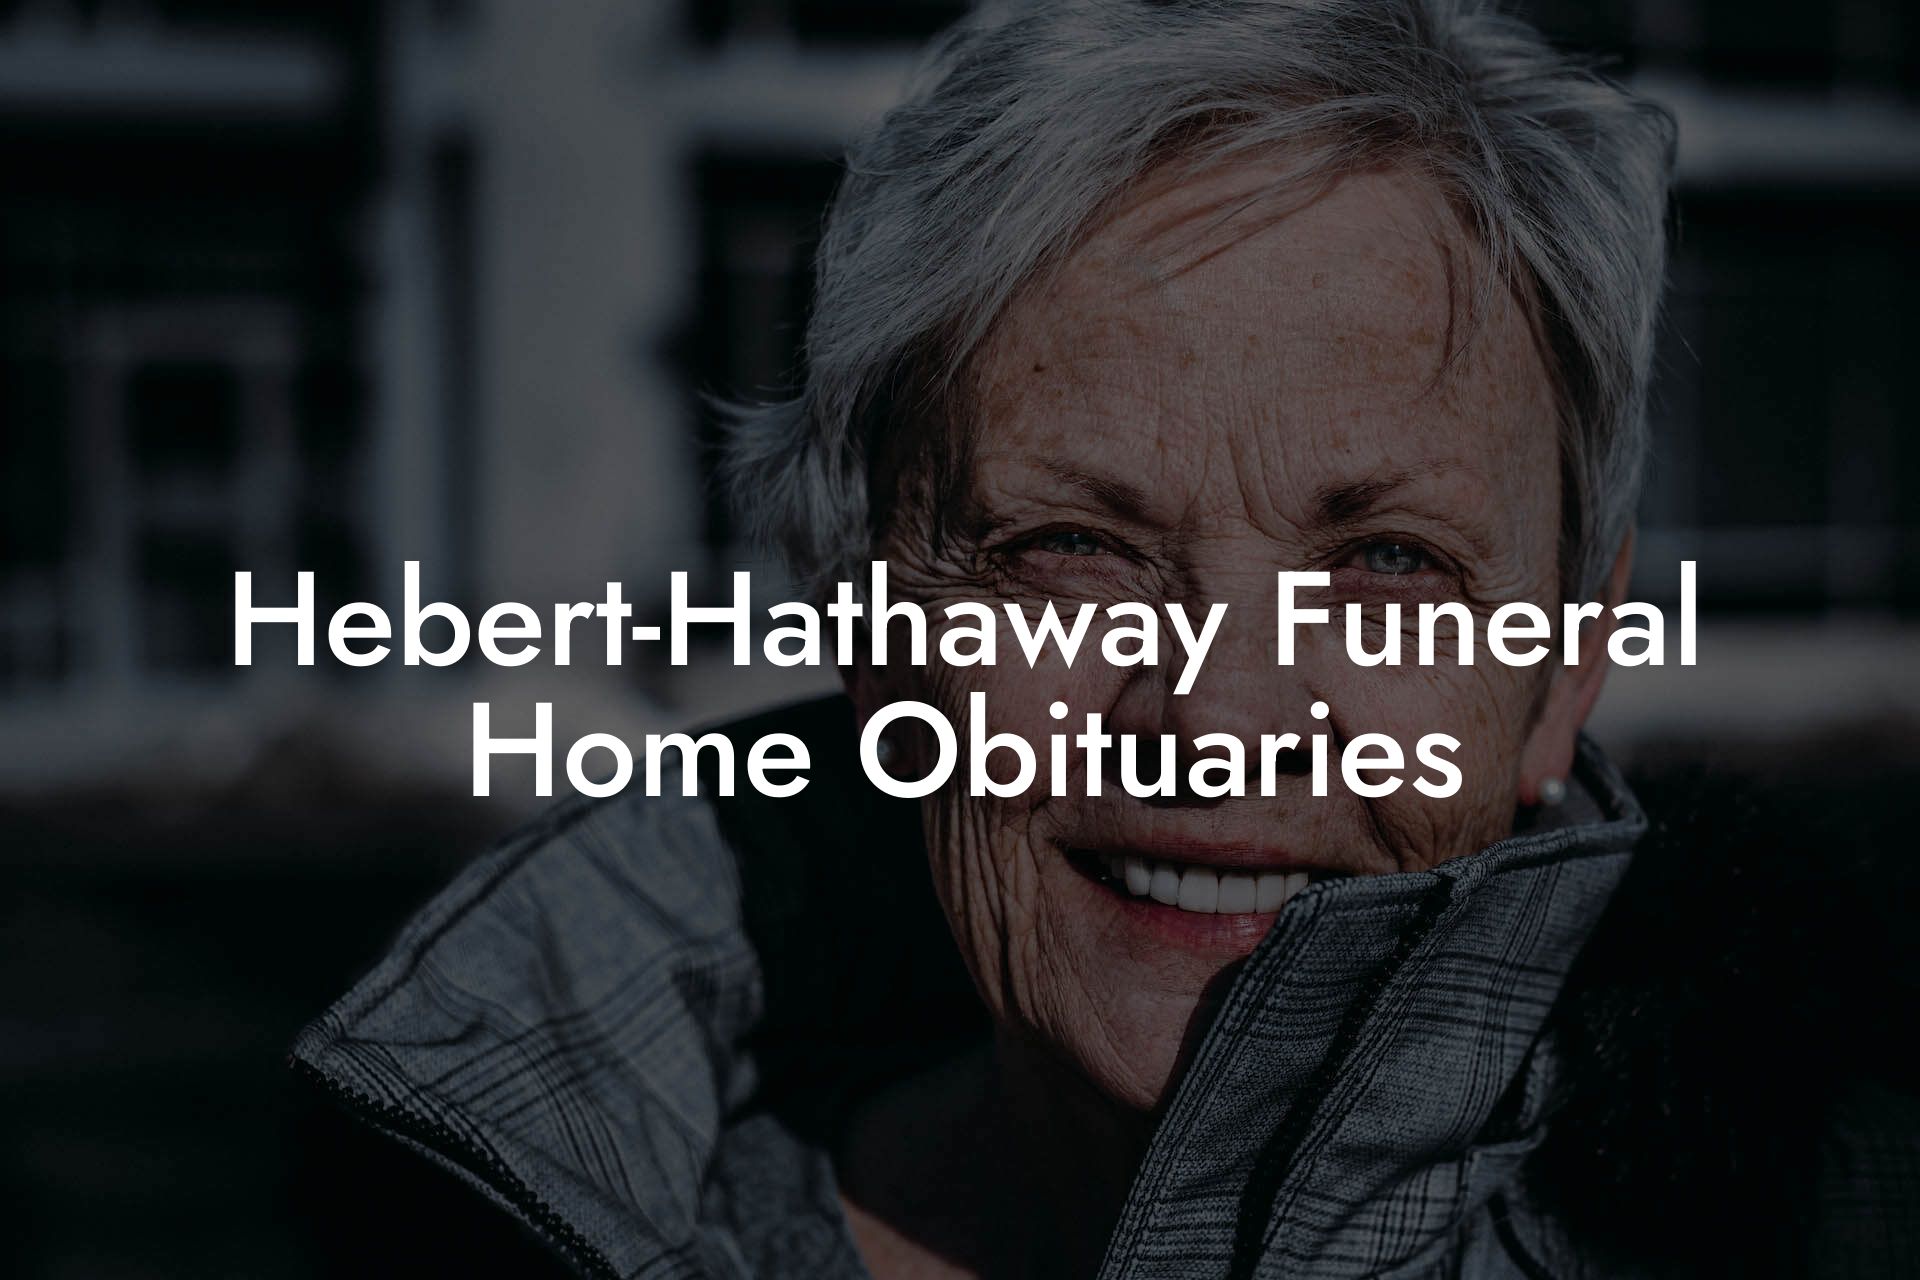 Hebert-Hathaway Funeral Home Obituaries